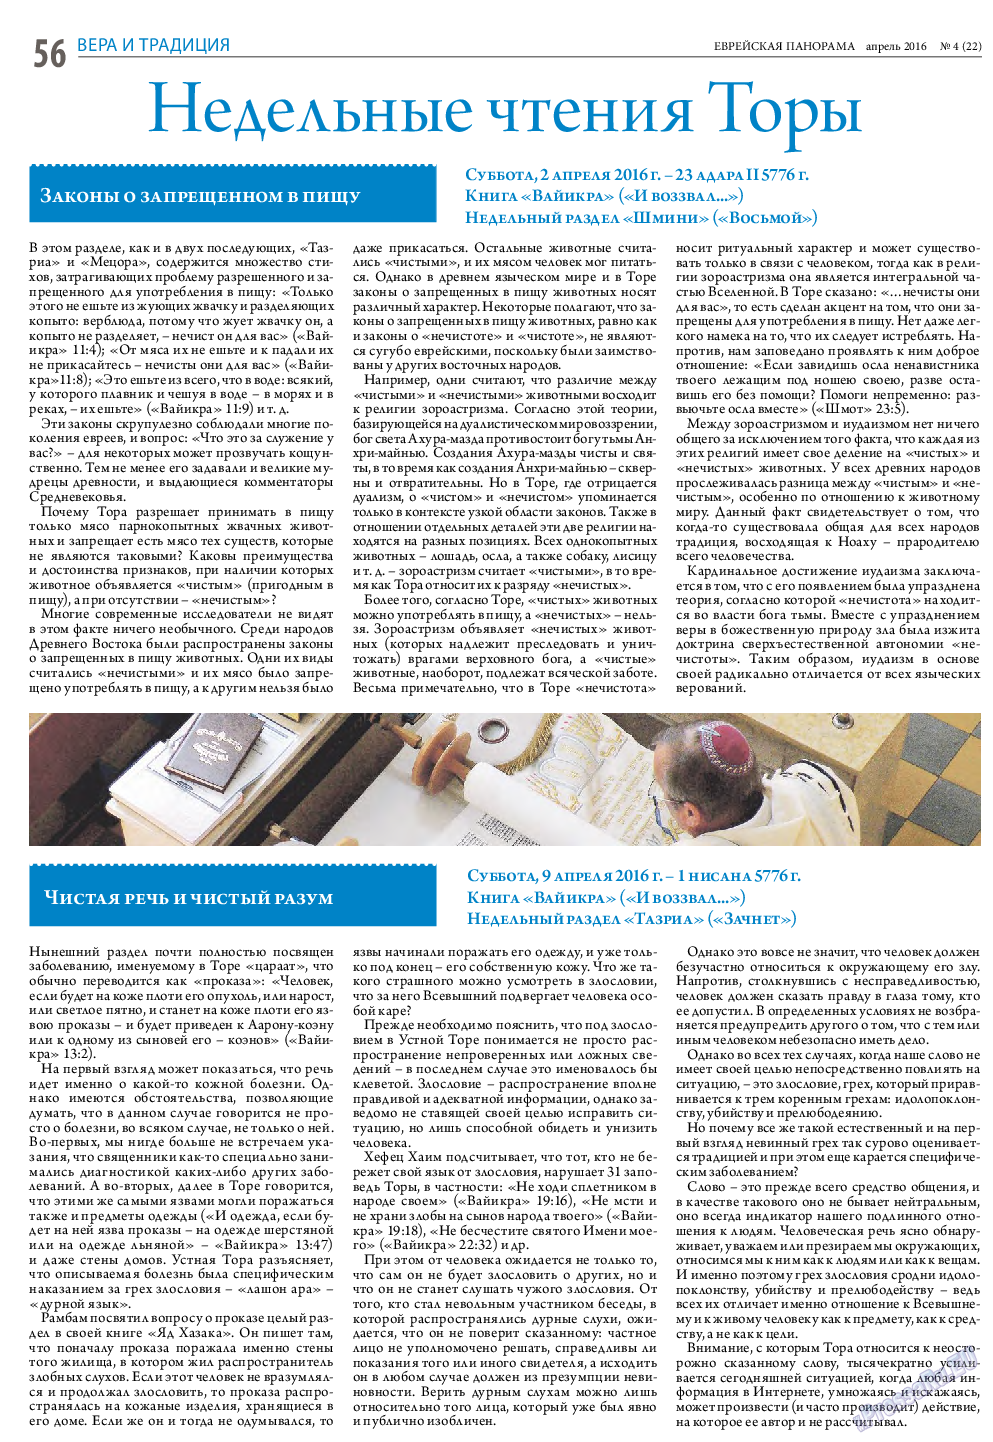 Еврейская панорама, газета. 2016 №4 стр.56